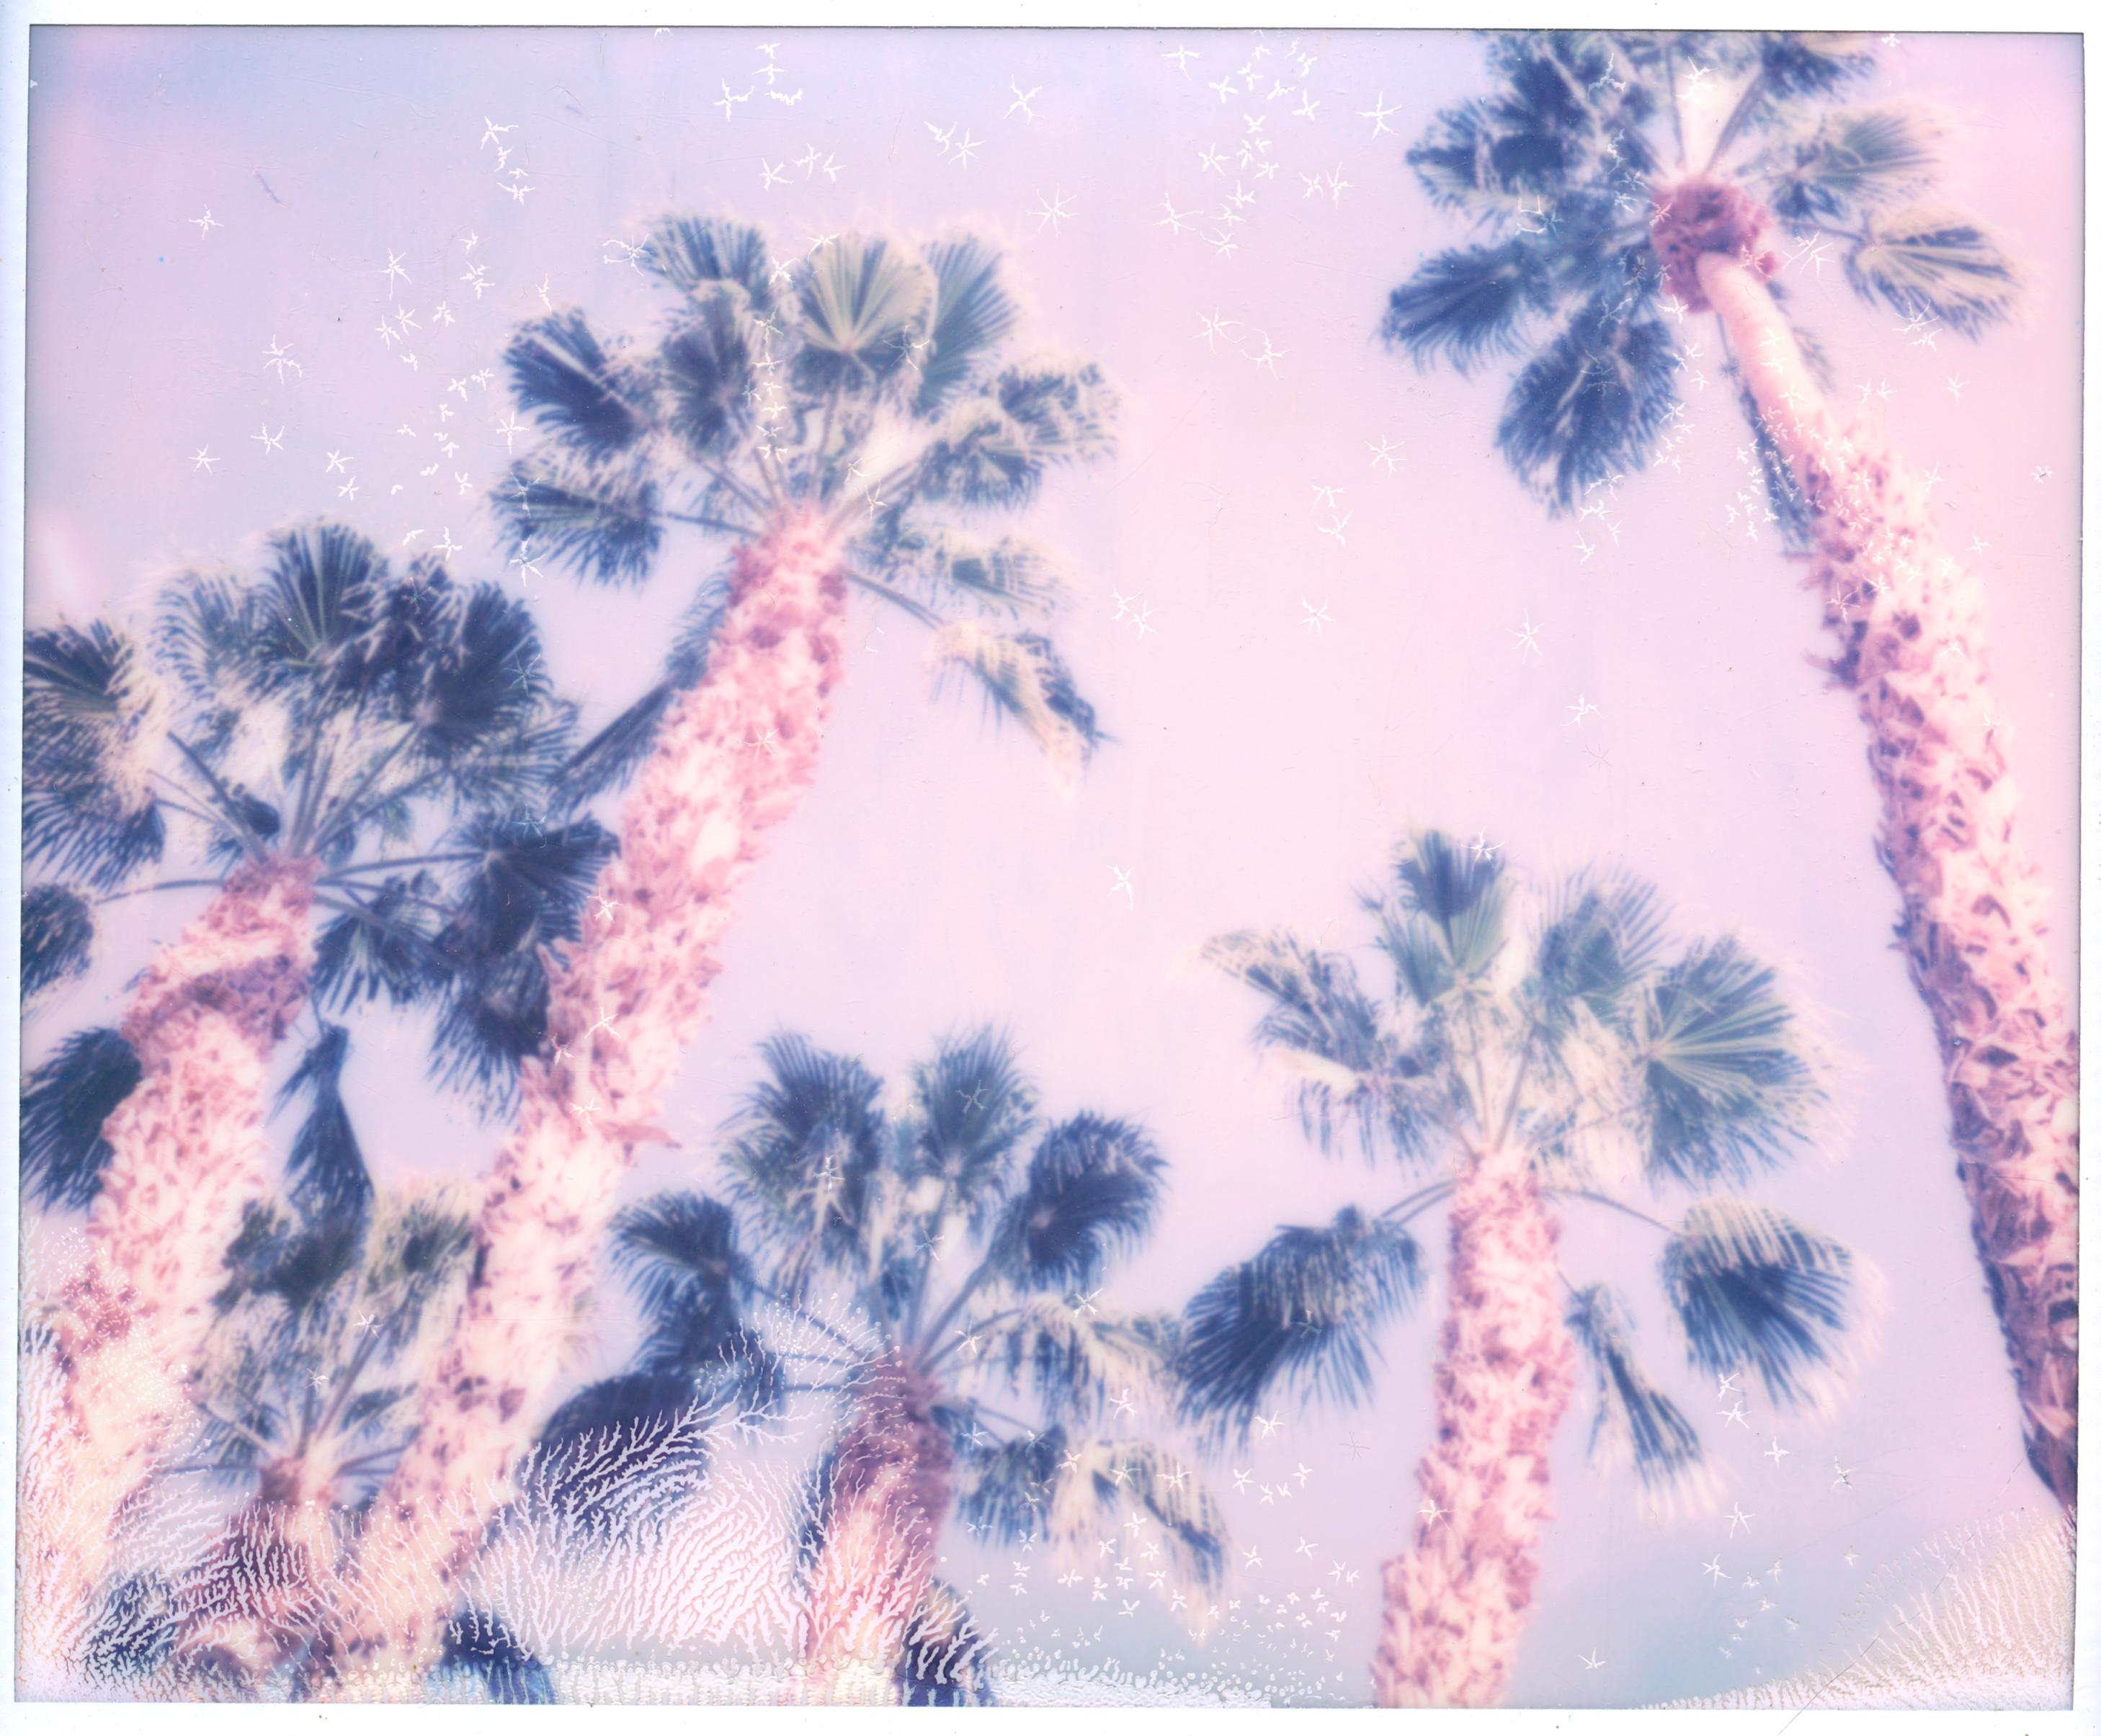 Stefanie Schneider Landscape Photograph - Snow Flakes (Californication) - Polaroid, Palm Trees, vintage, contemporary